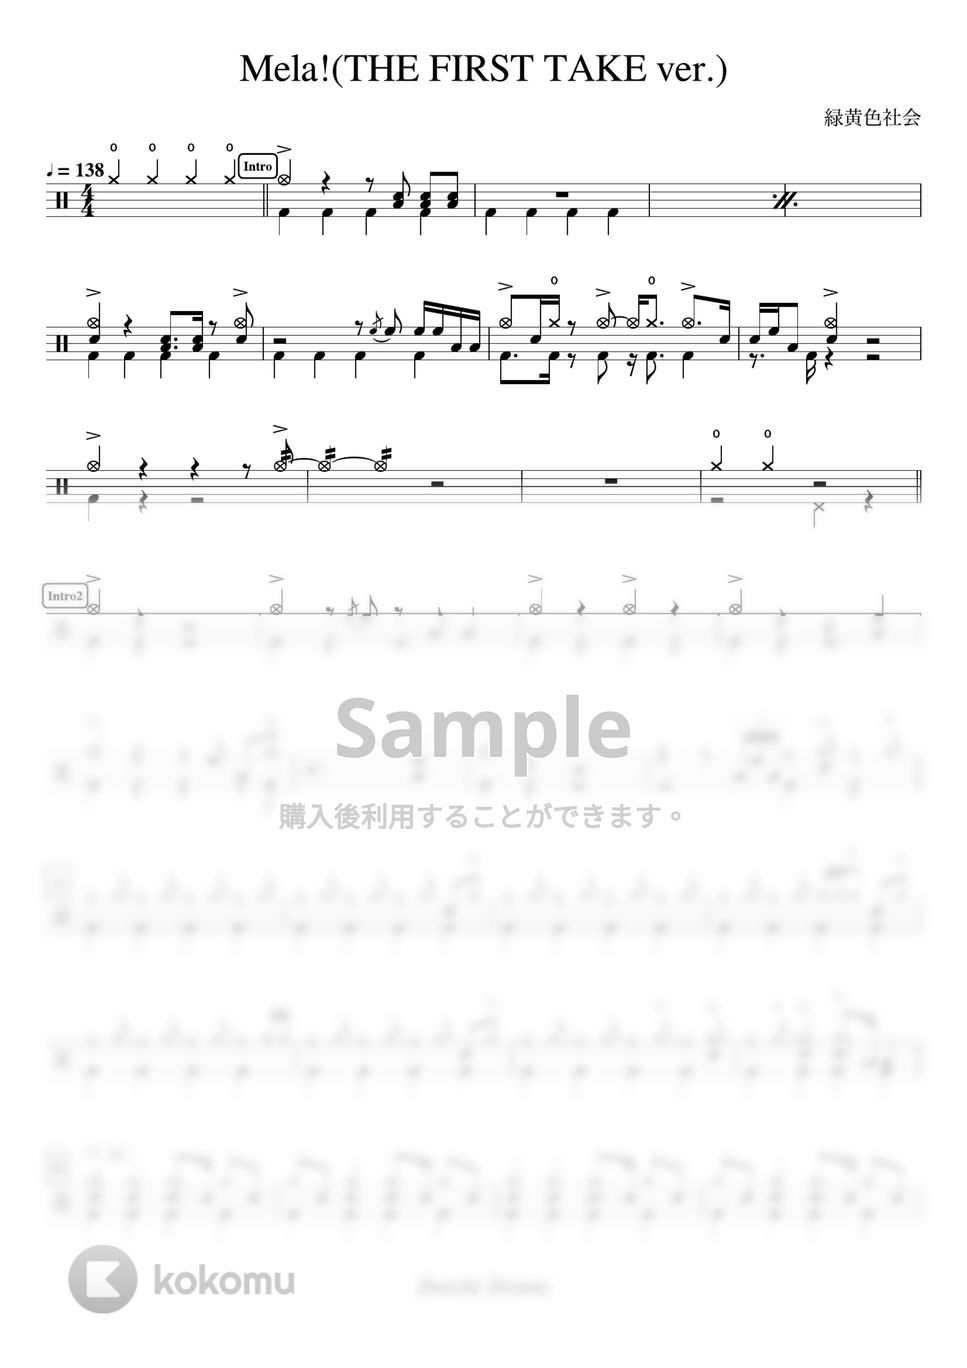 緑黄色社会 - Mela!(THE FIRST TAKE ver.) by Daichi Drums